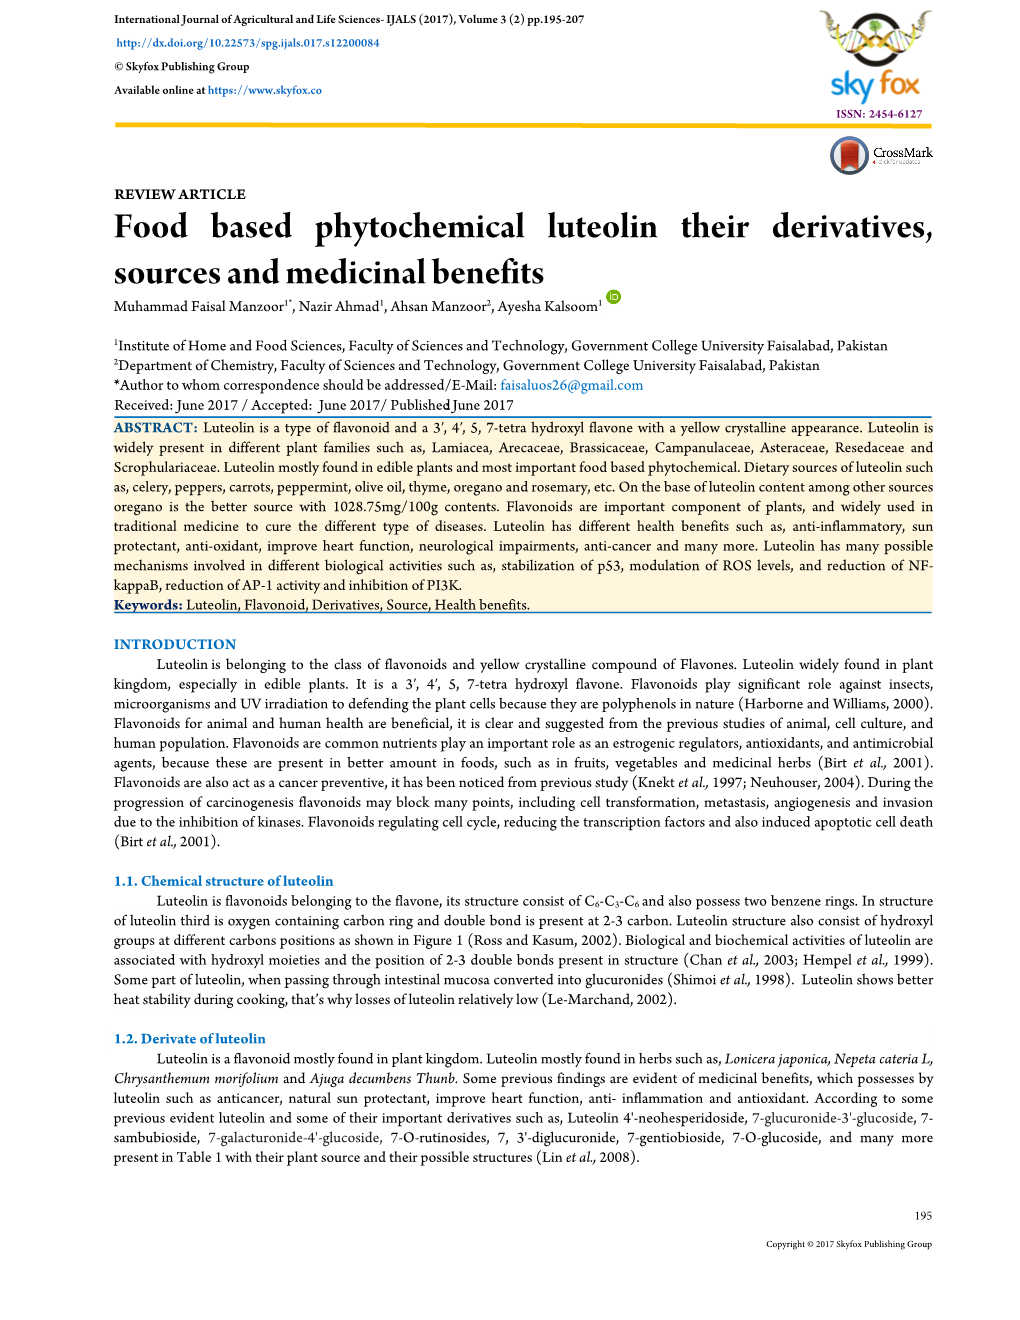 Food Based Phytochemical Luteolin Their Derivatives, Sources and Medicinal Benefits Muhammad Faisal Manzoor1*, Nazir Ahmad1, Ahsan Manzoor2, Ayesha Kalsoom1